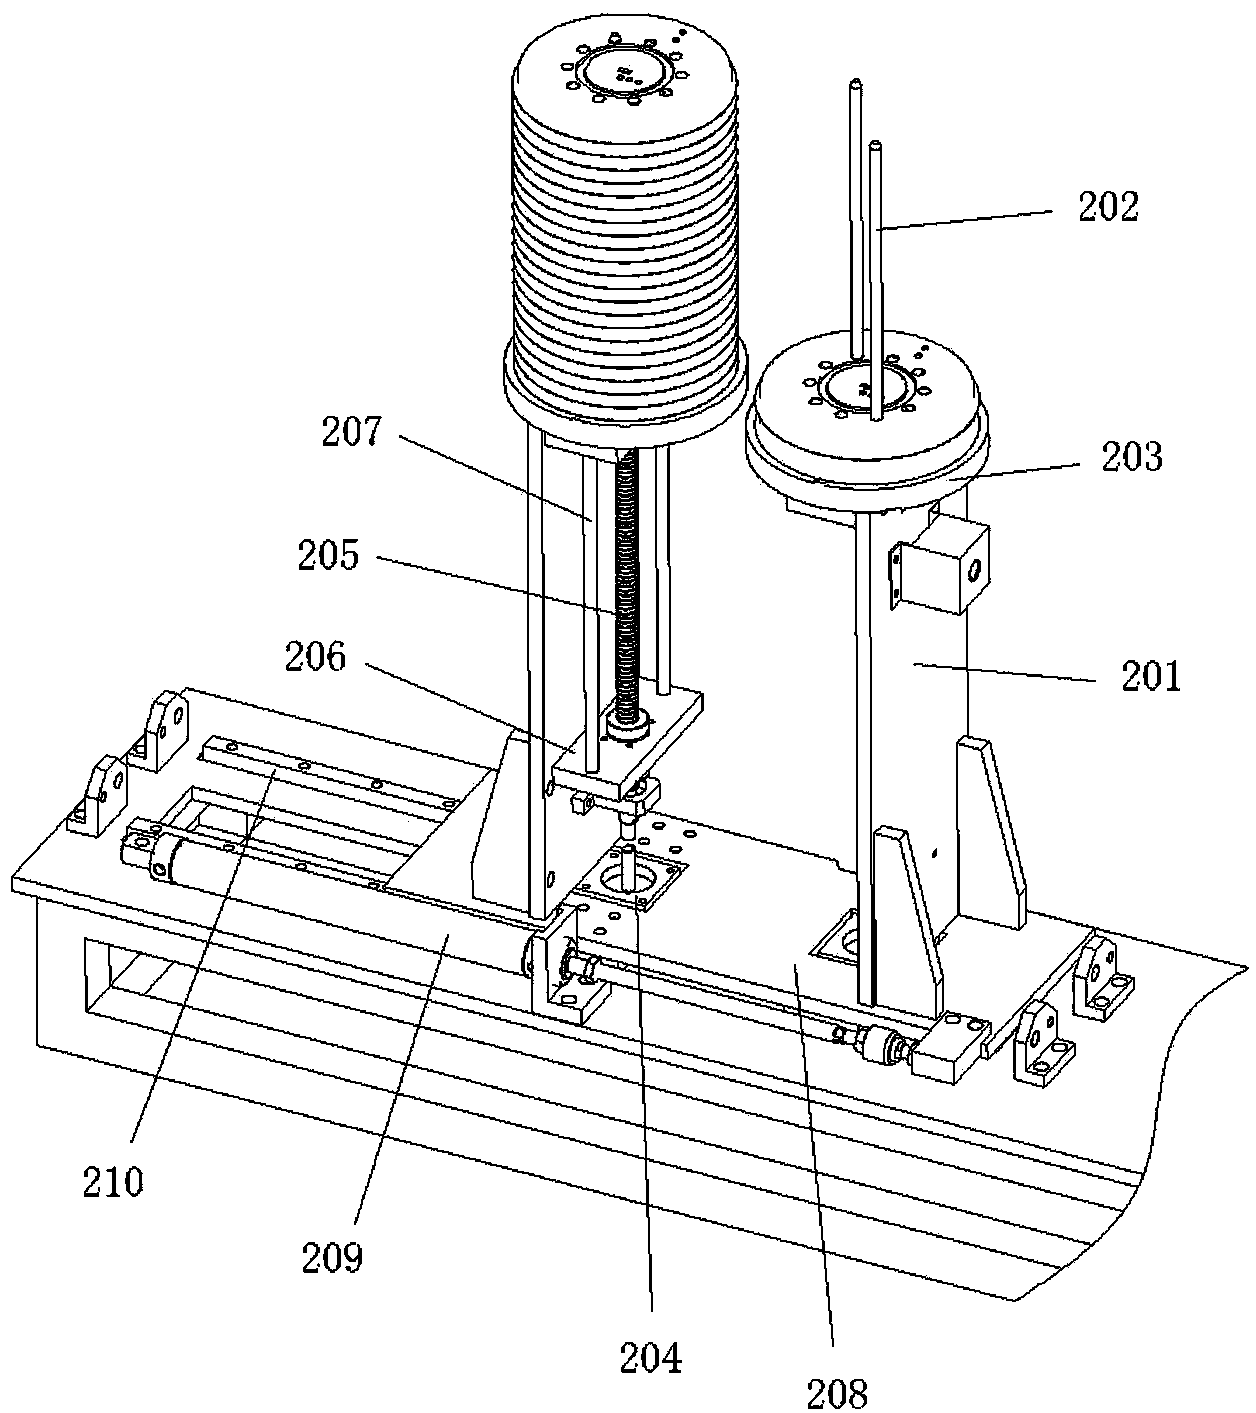 Automatic assembling machine for lamp bracket